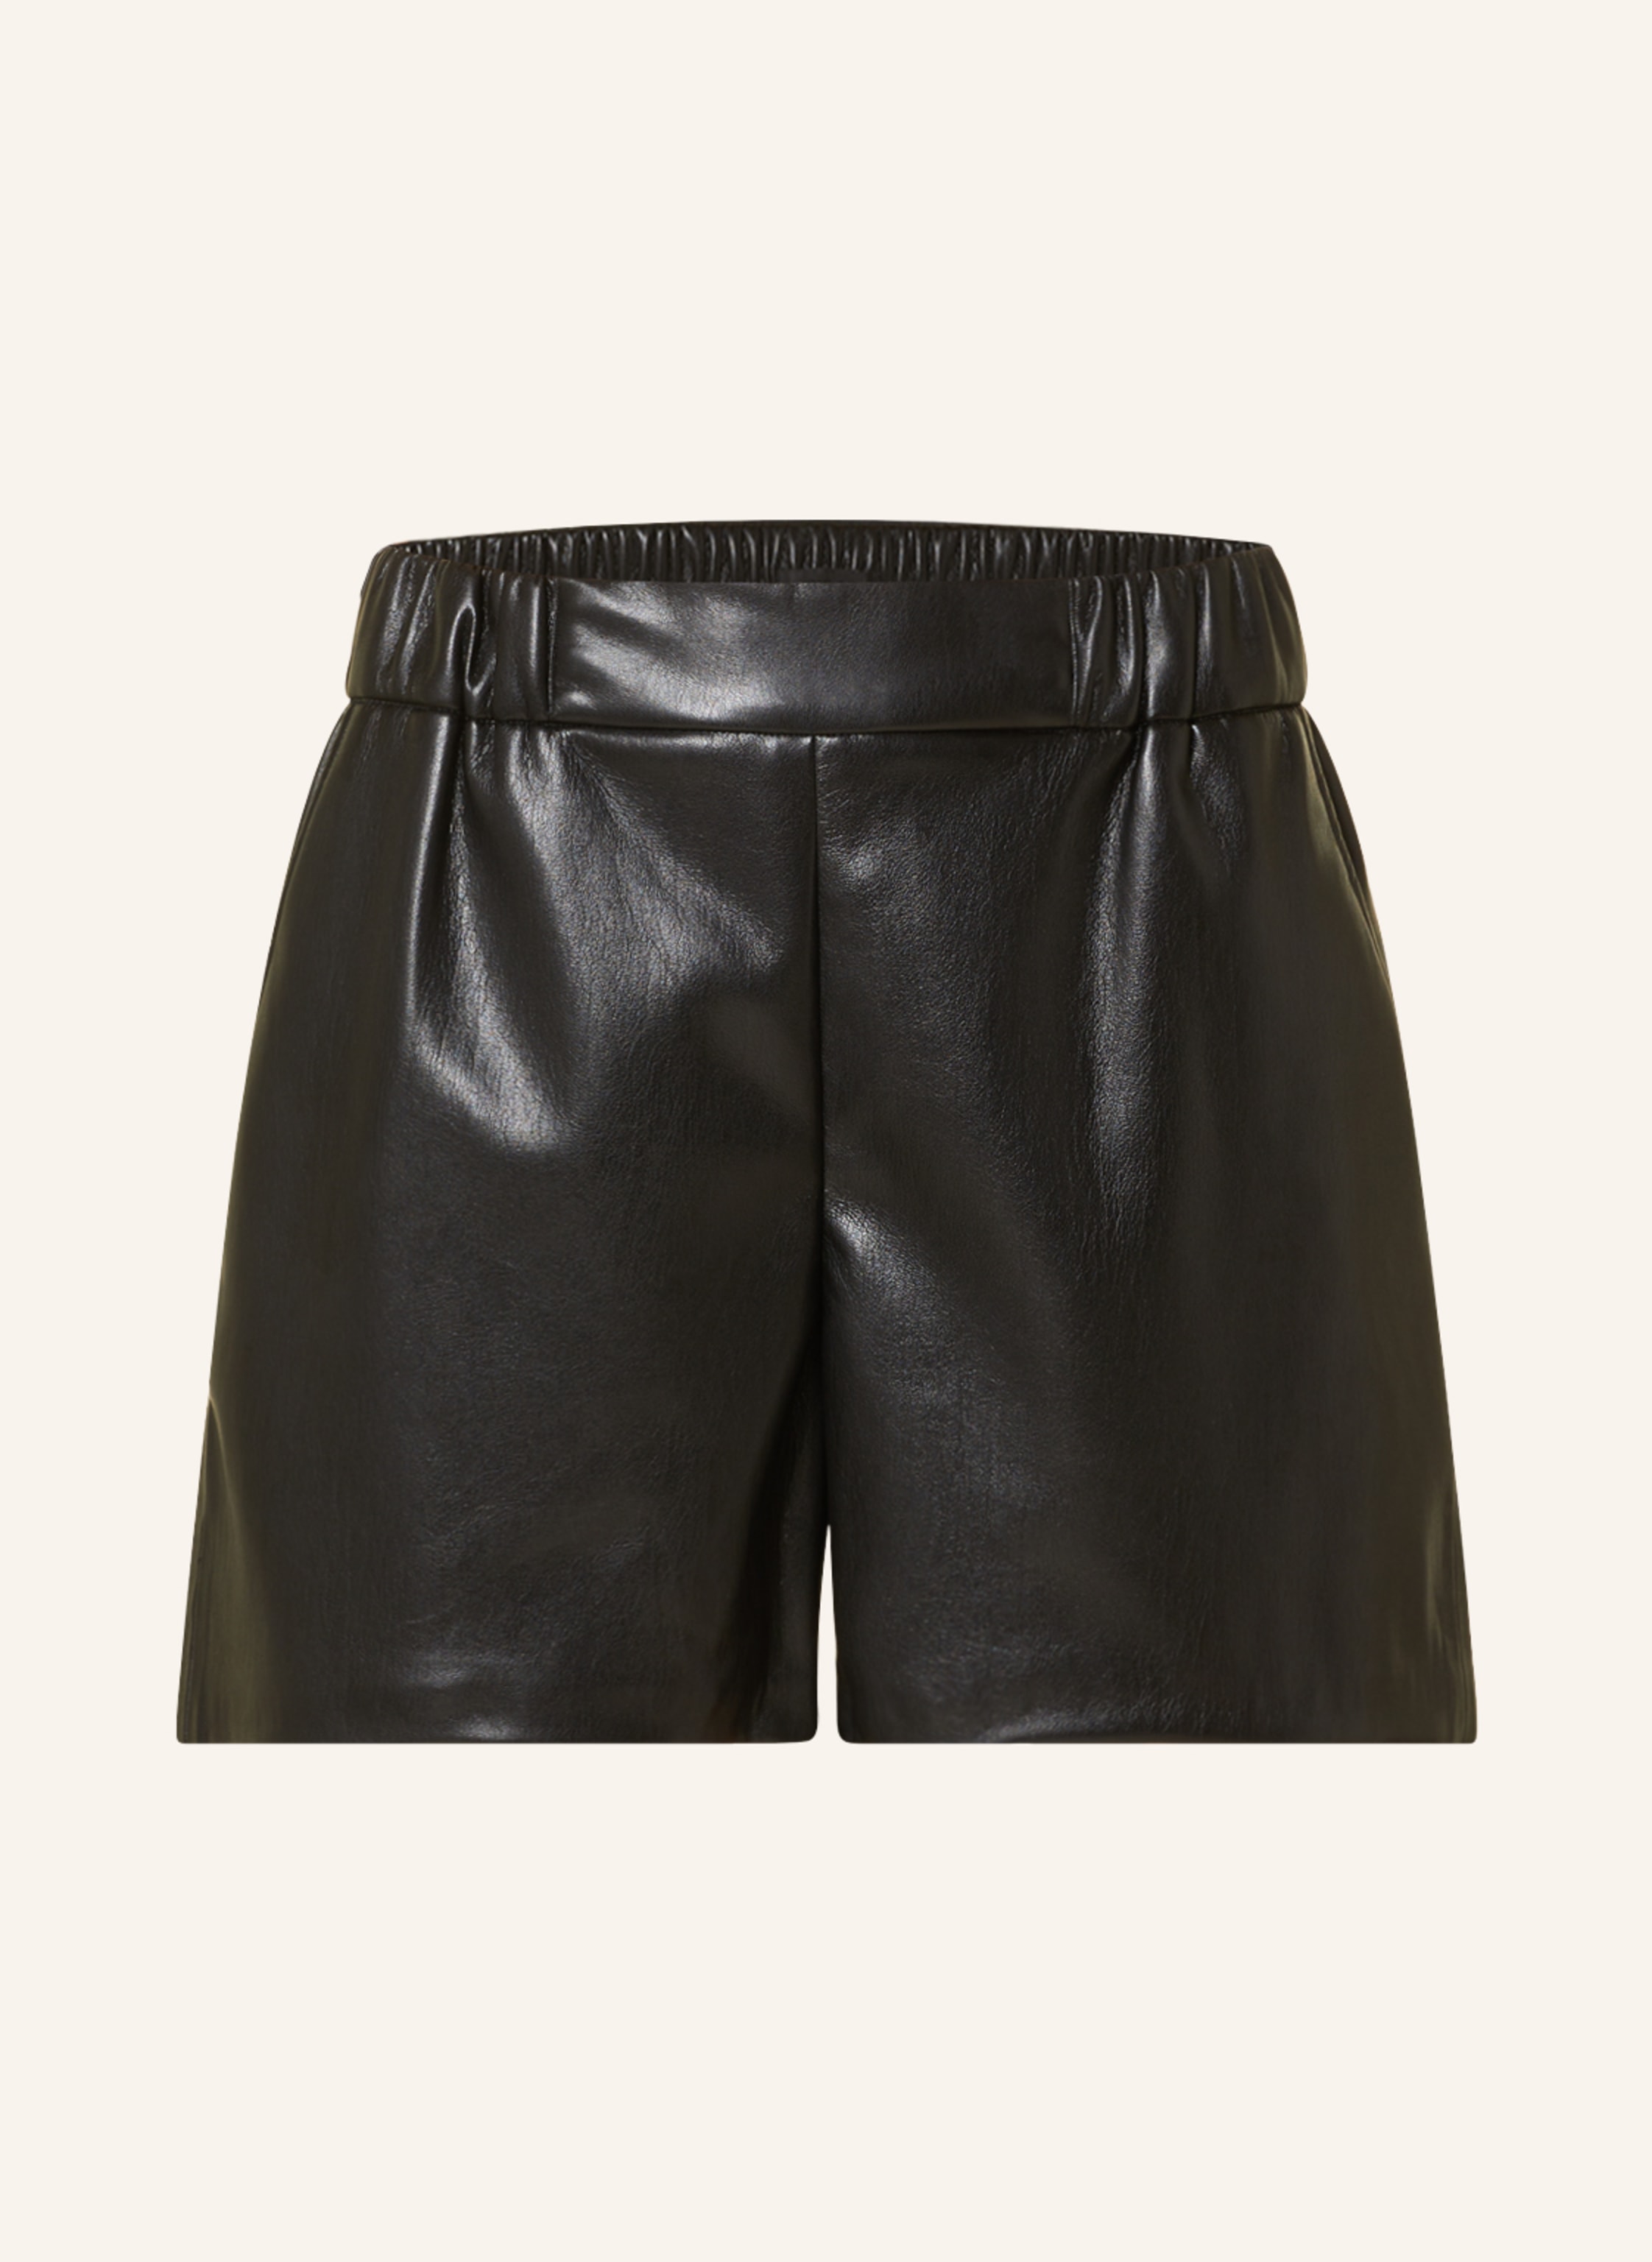 ANINE BING Shorts KOA in leather look in black | Breuninger